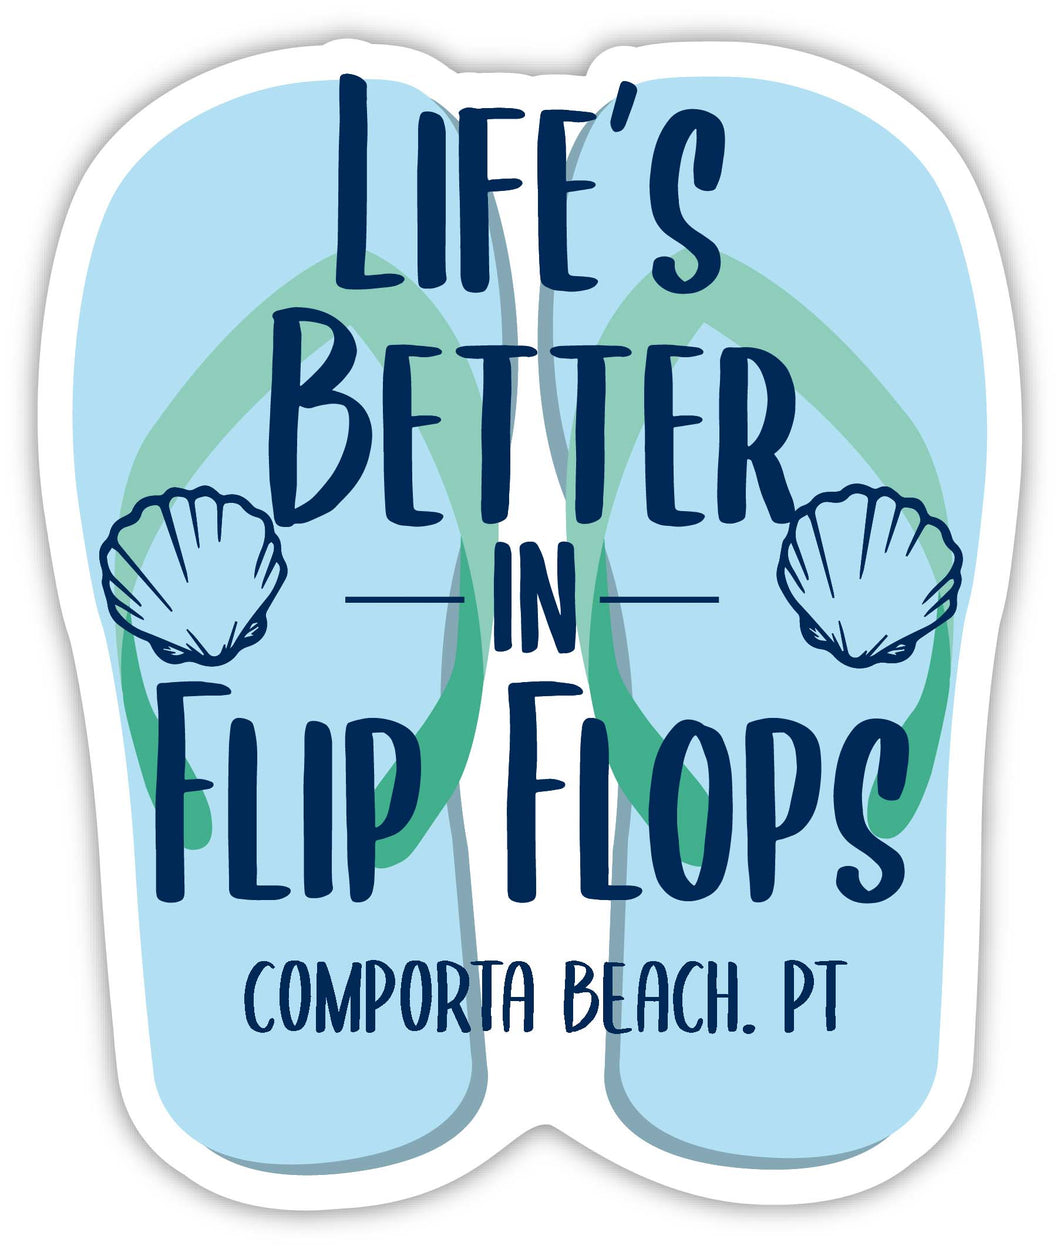 Comporta Beach Portugal Souvenir 4 Inch Vinyl Decal Sticker Flip Flop Design